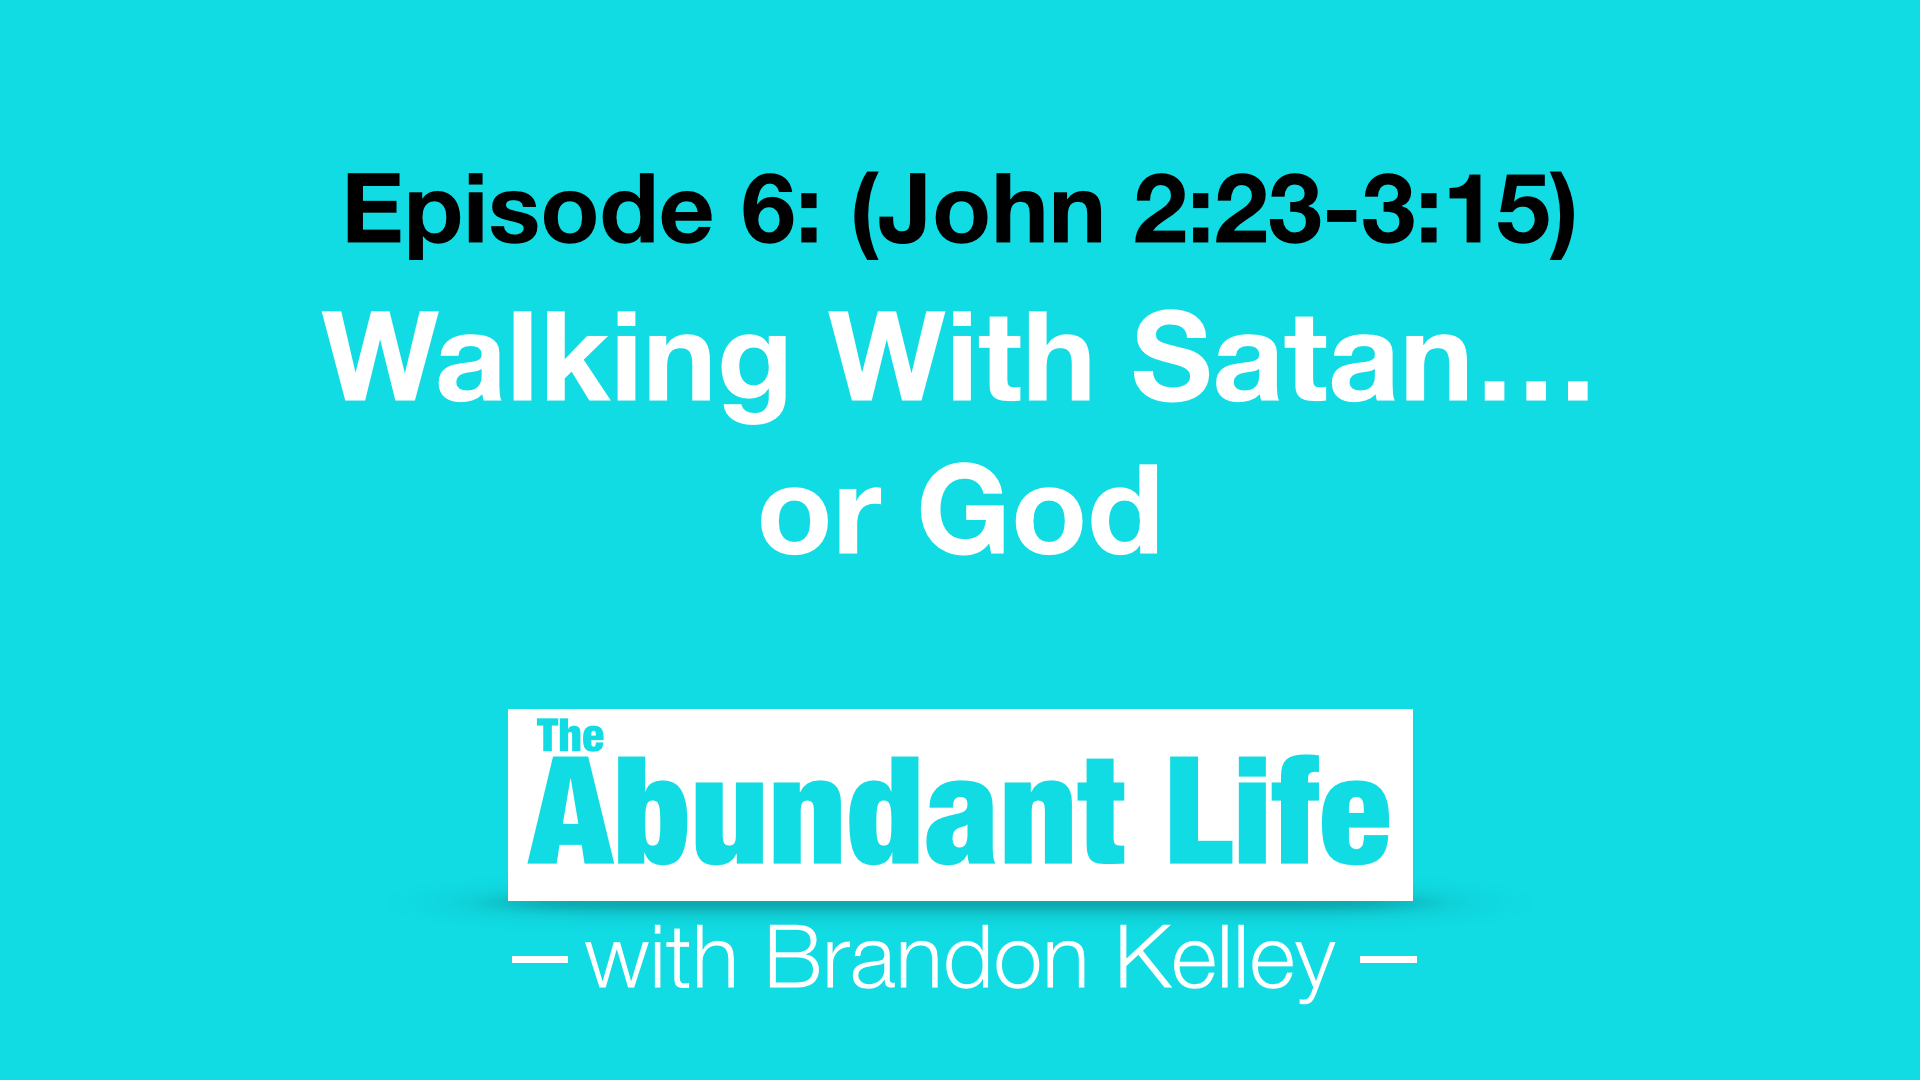 Walking With Satan...or God